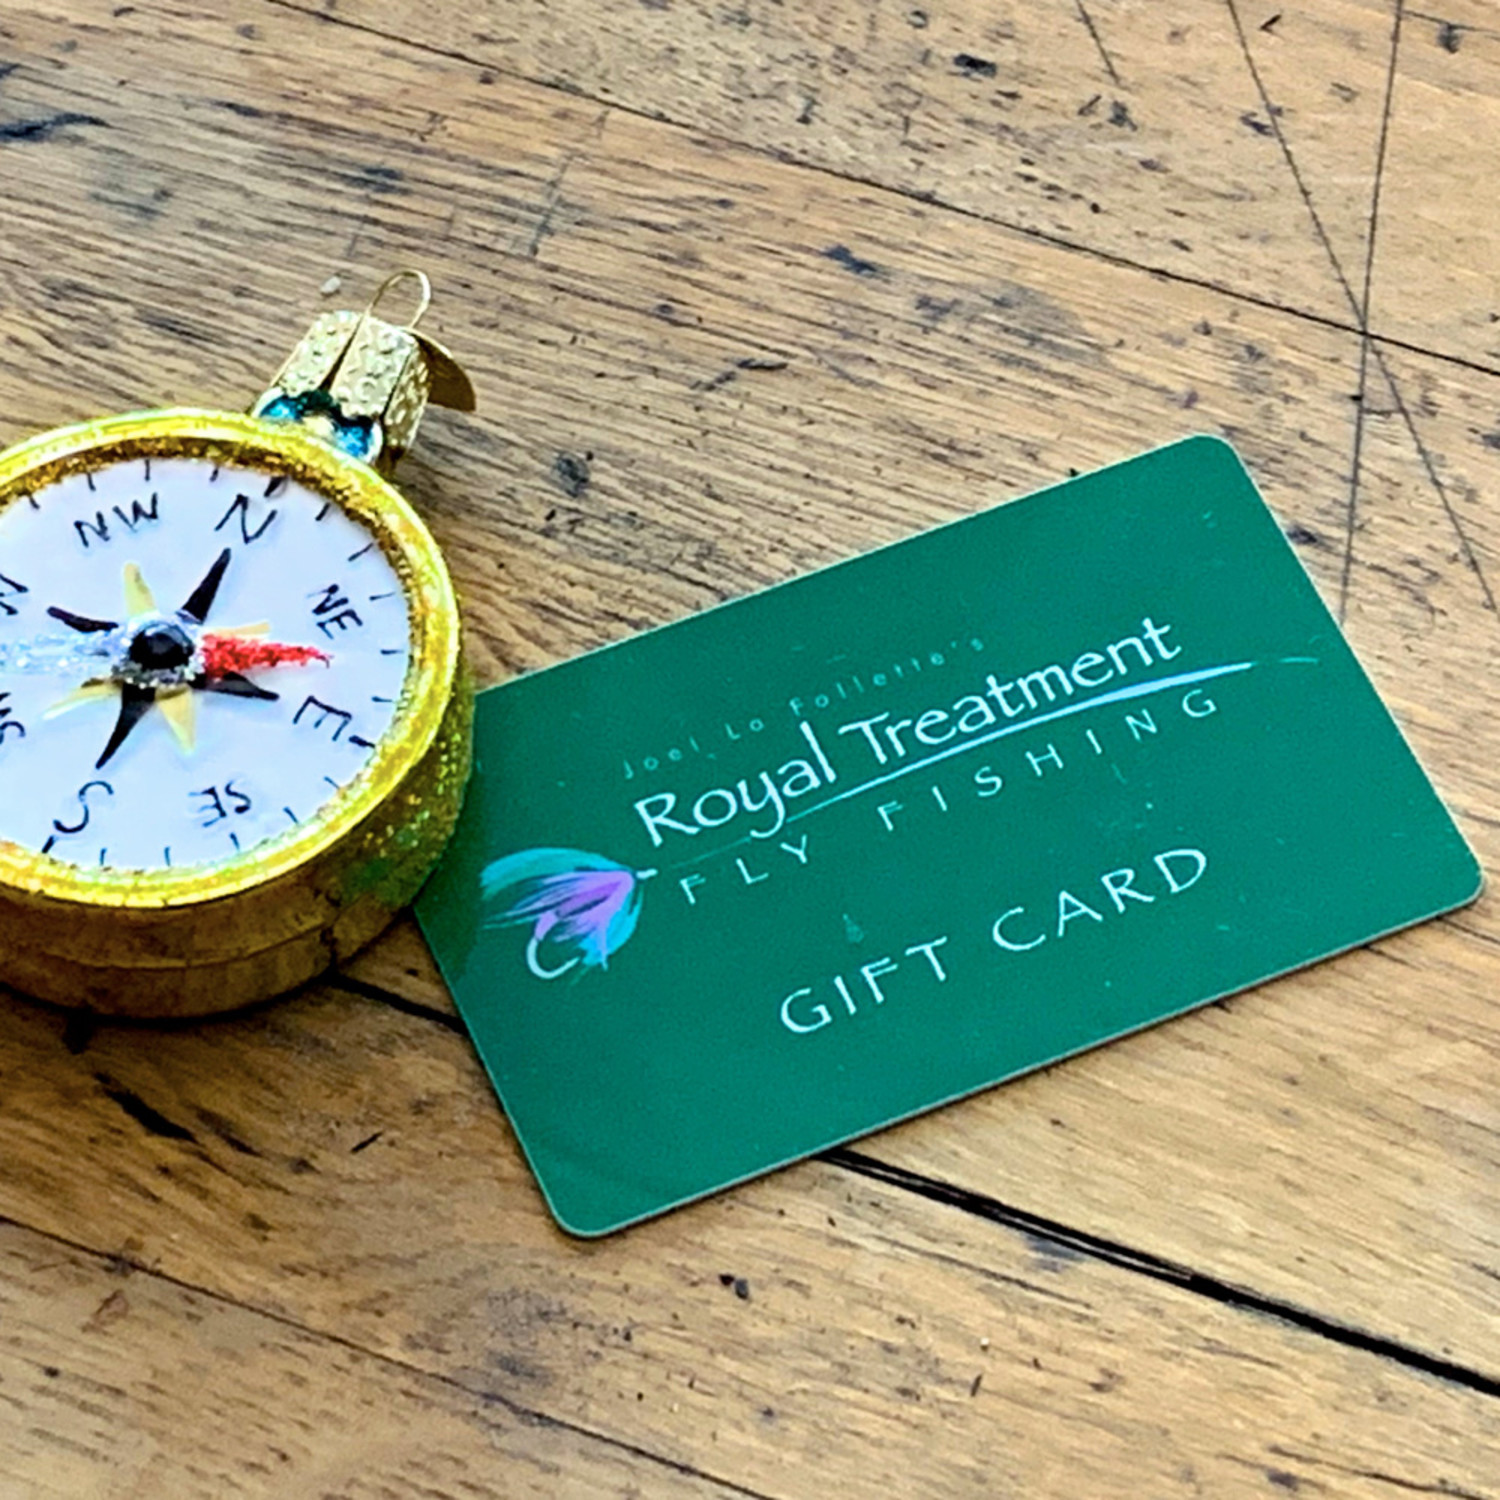 Royal Treatment Fly Fishing Gift Card Web Sales - Royal Treatment